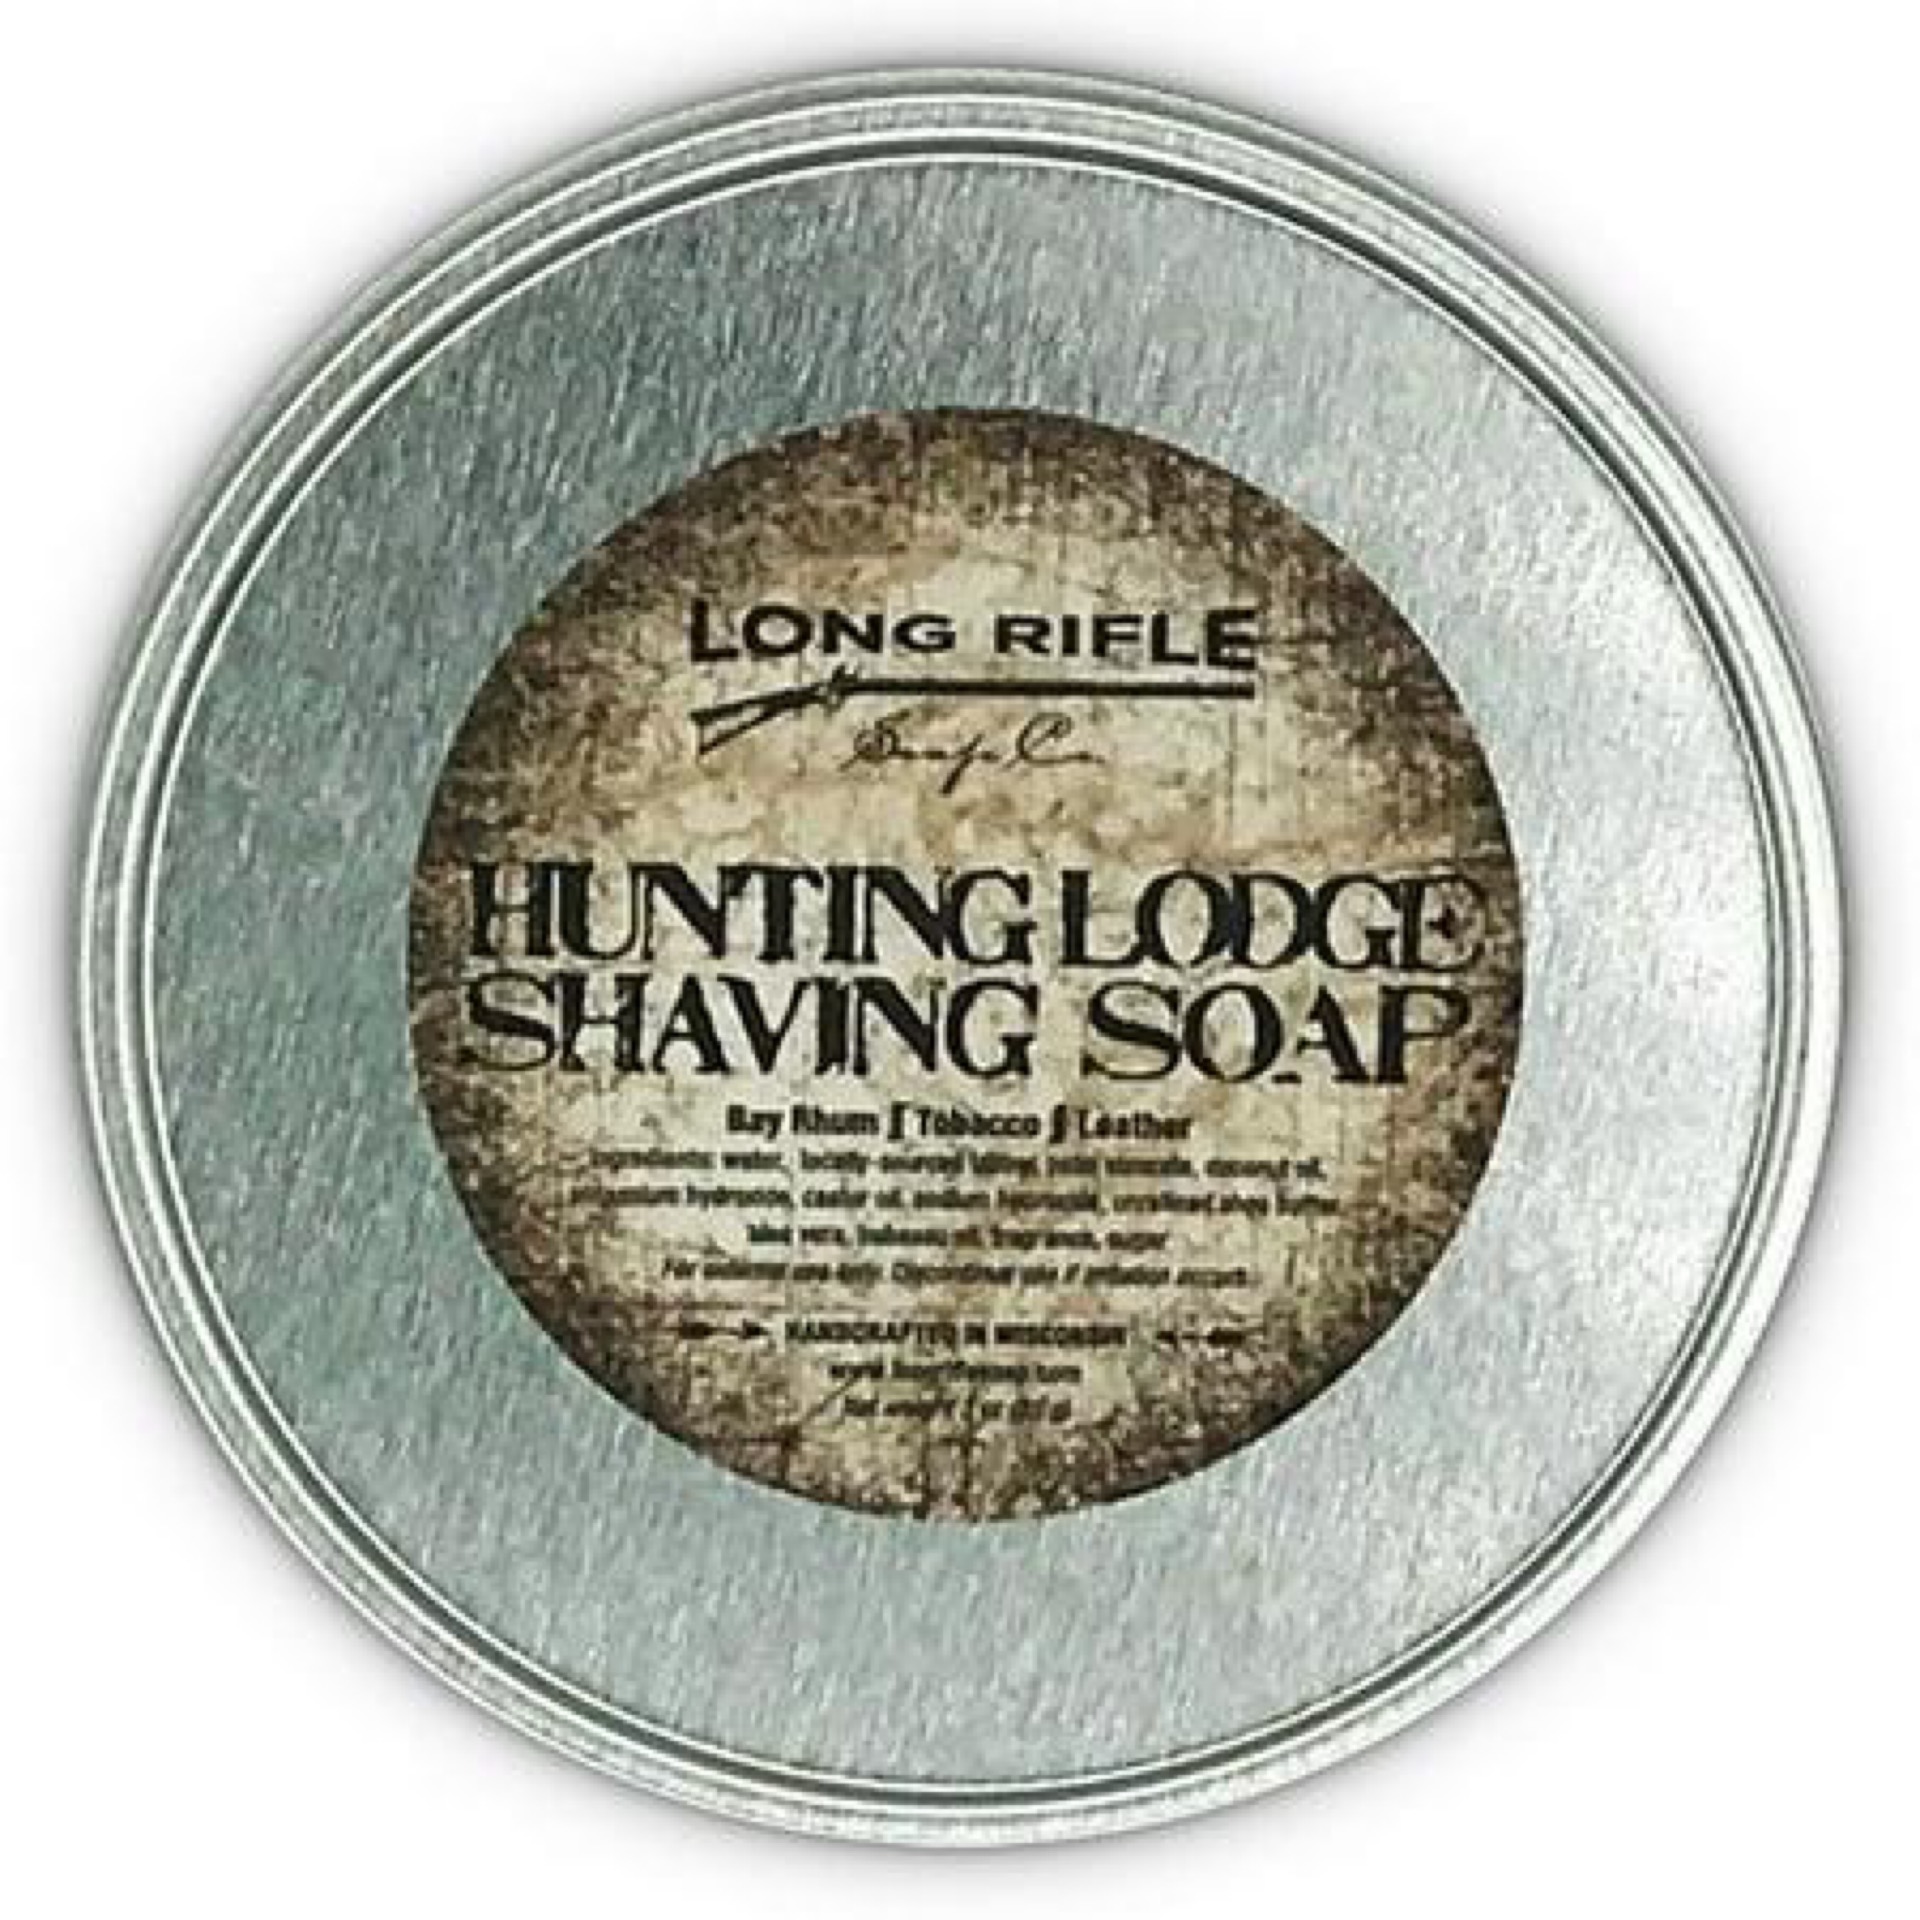 hunting lodge shaving soap